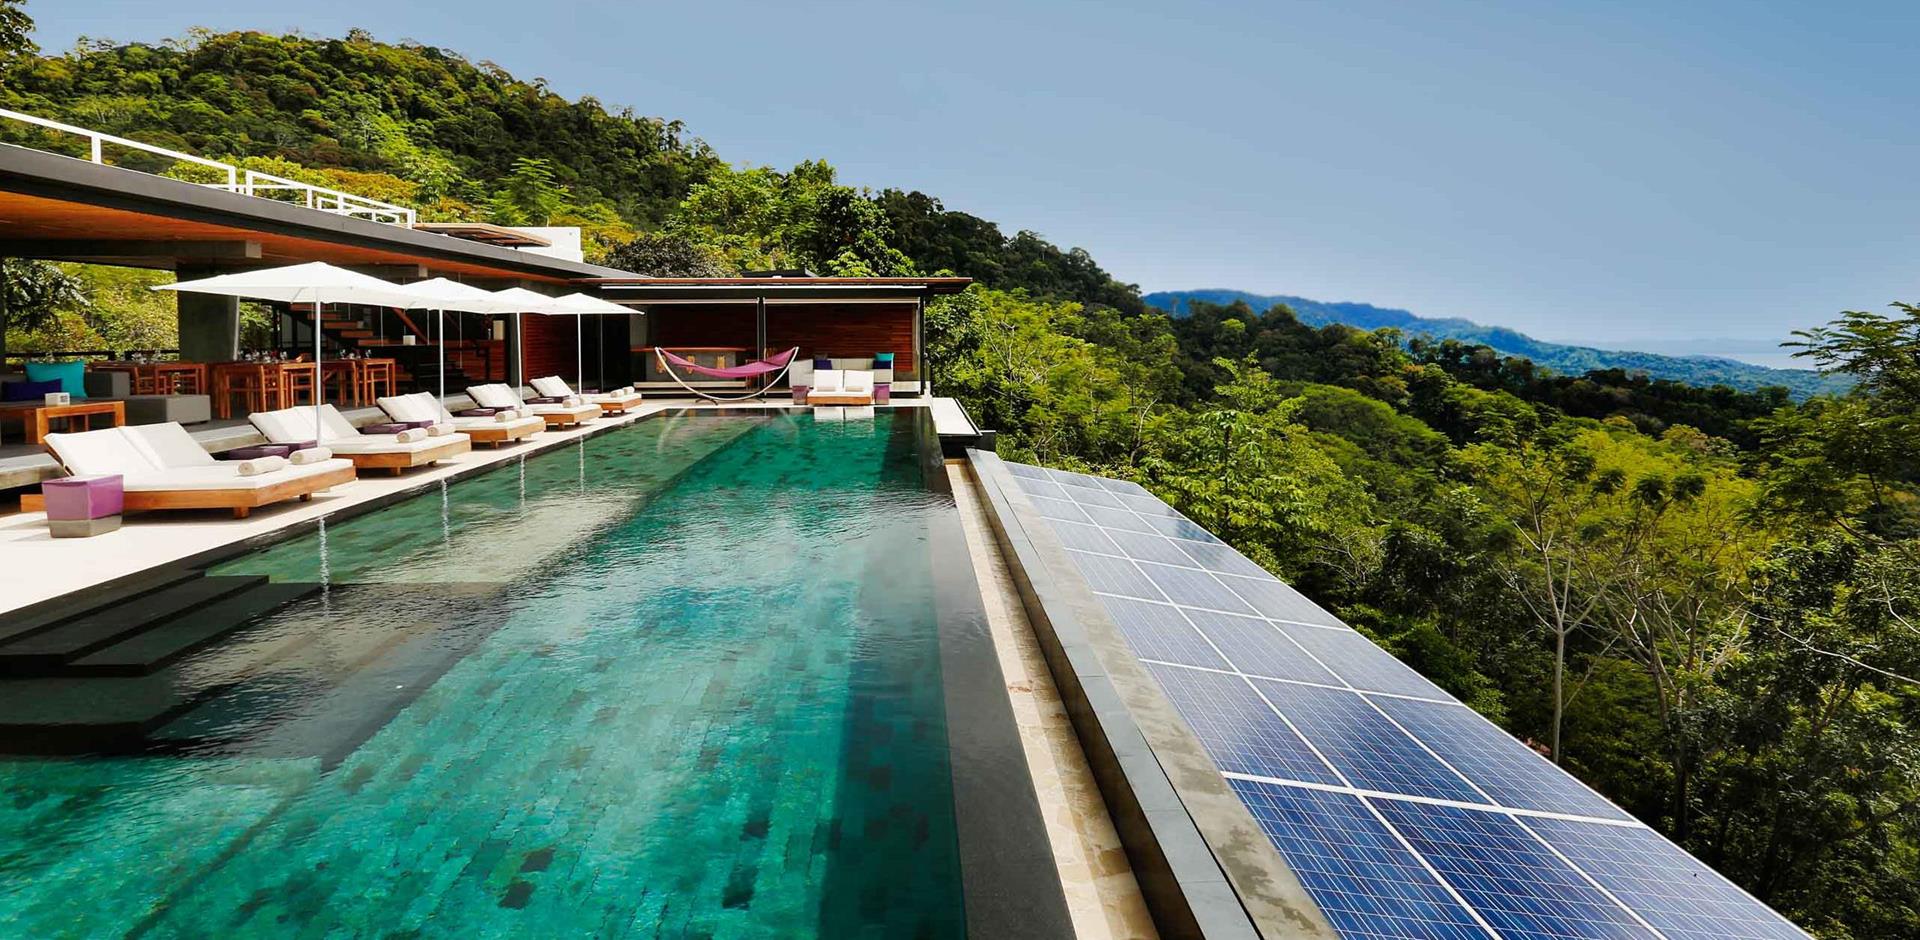 Poolside view, Kura Design Villas, Costa Rica